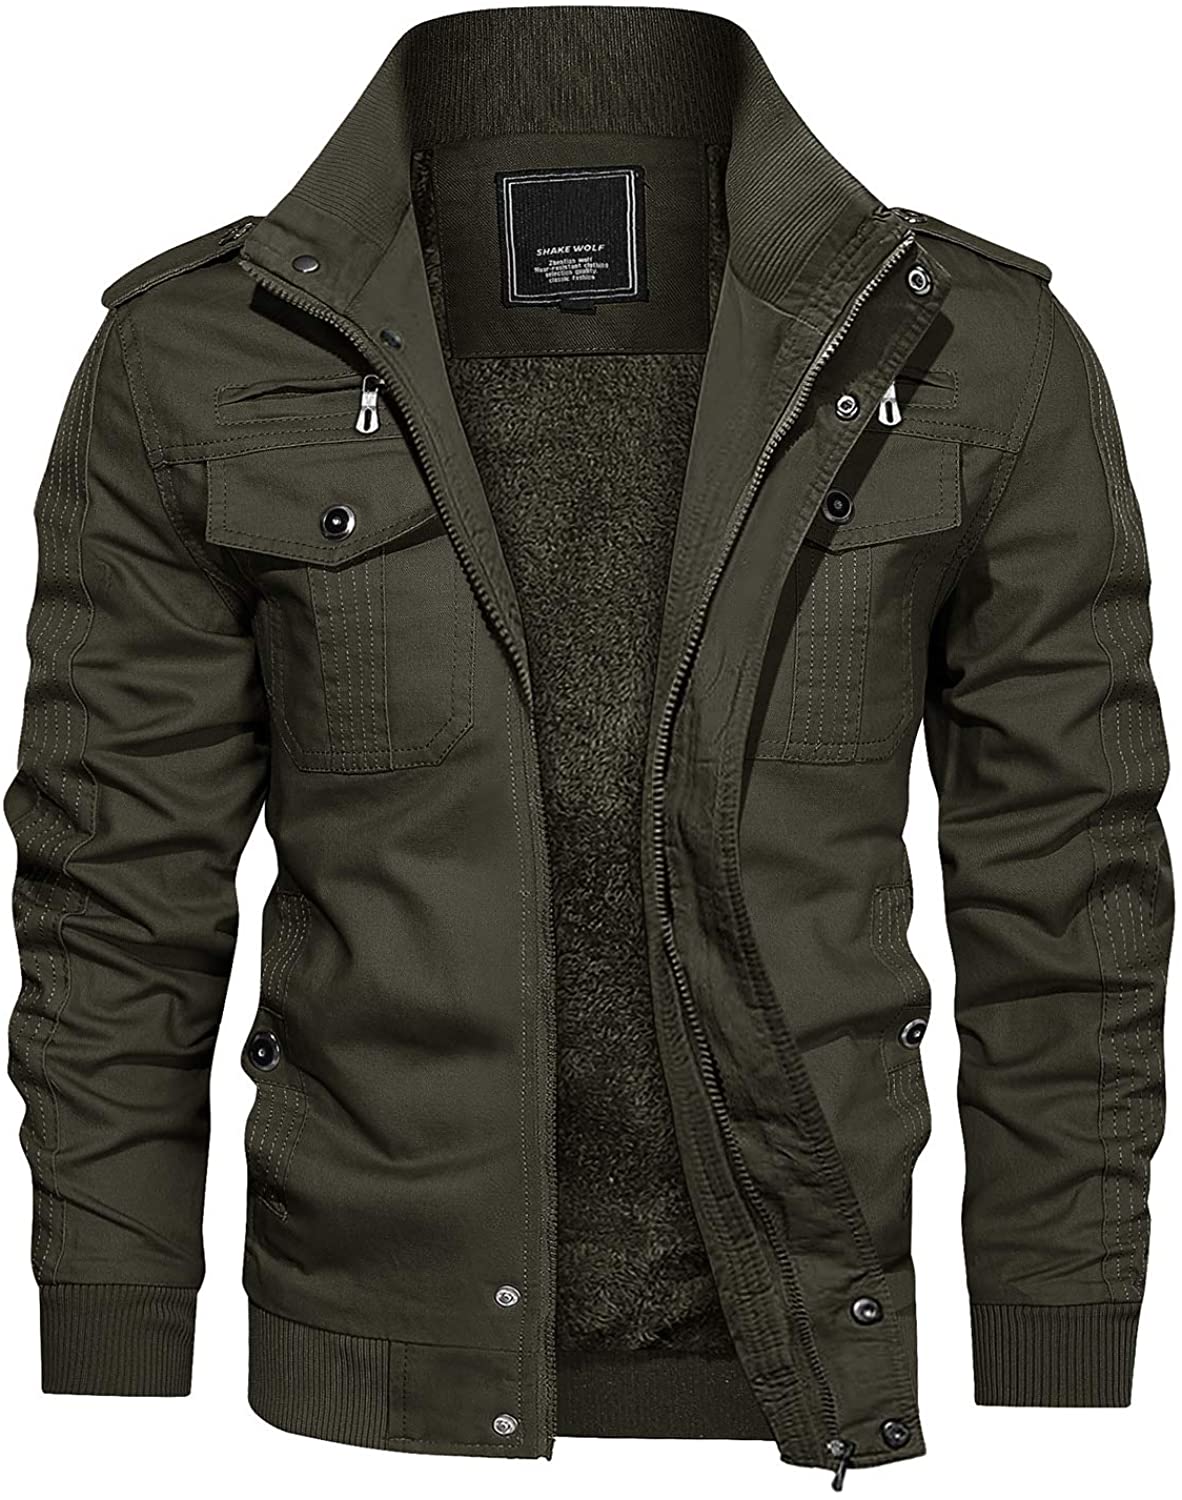 CRYSULLY Men's Winter Casual Thicken Multi-Pocket Field Jacket Outwear ...